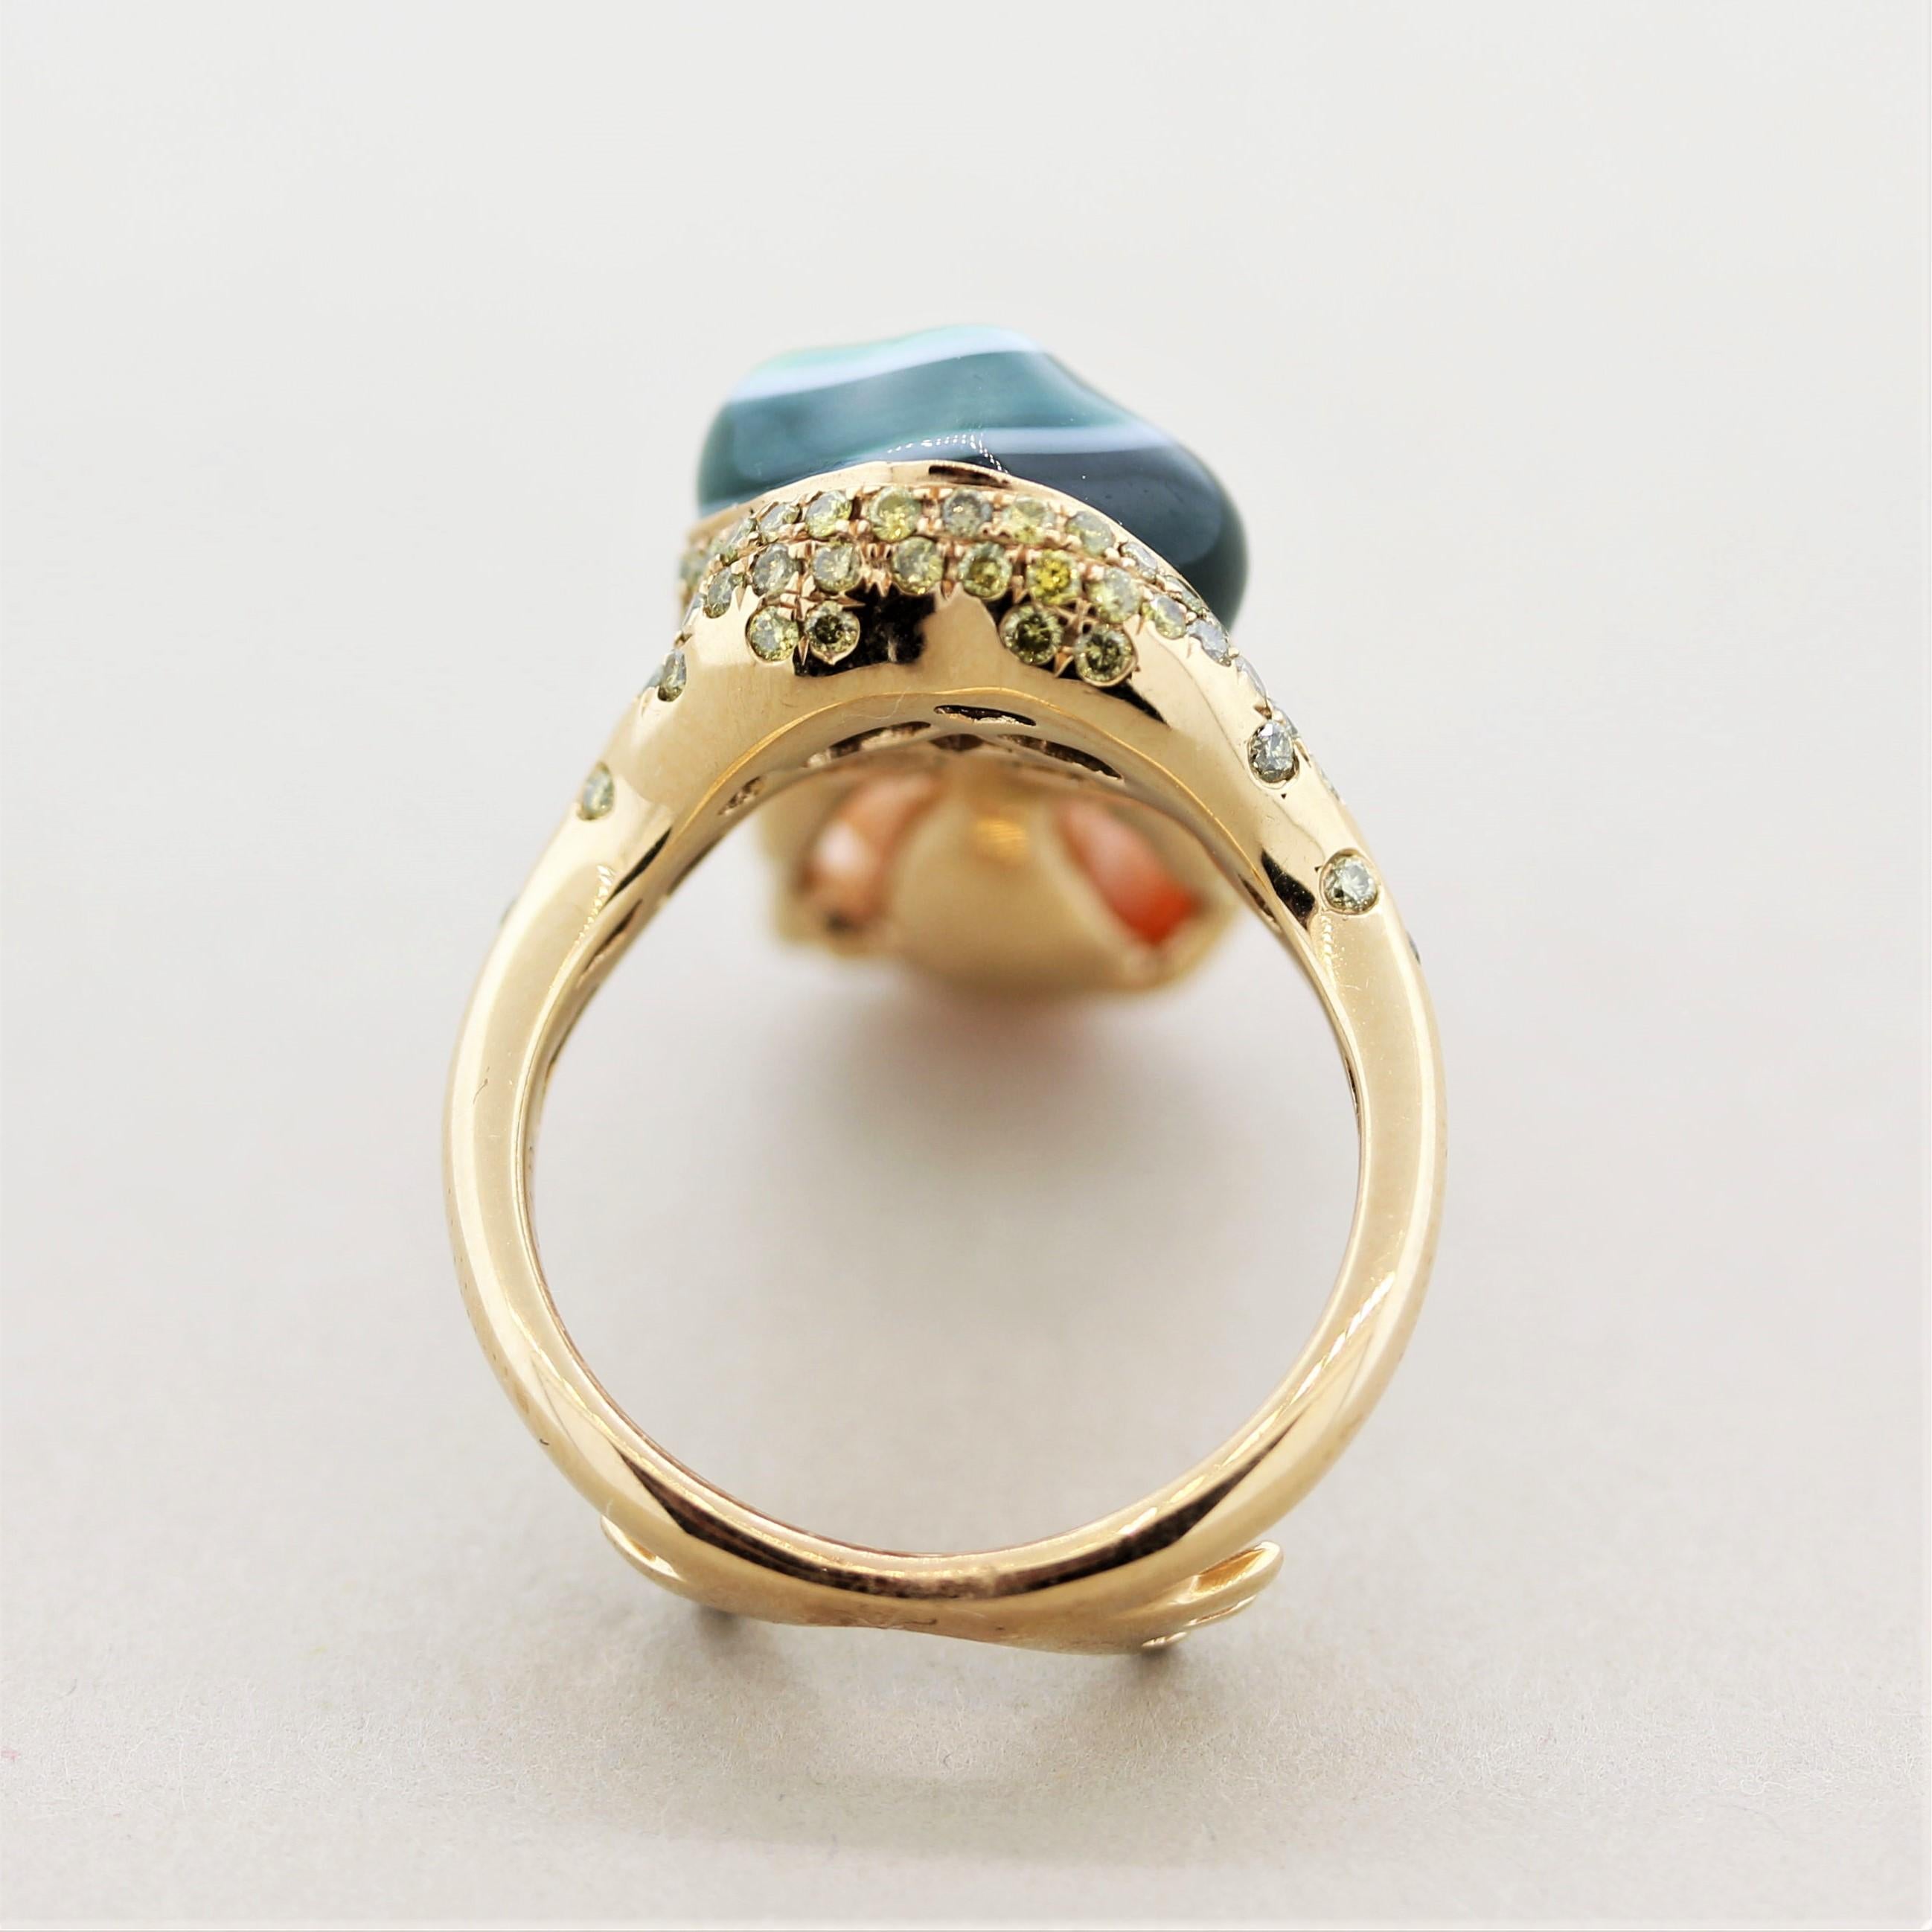 frog wedding ring